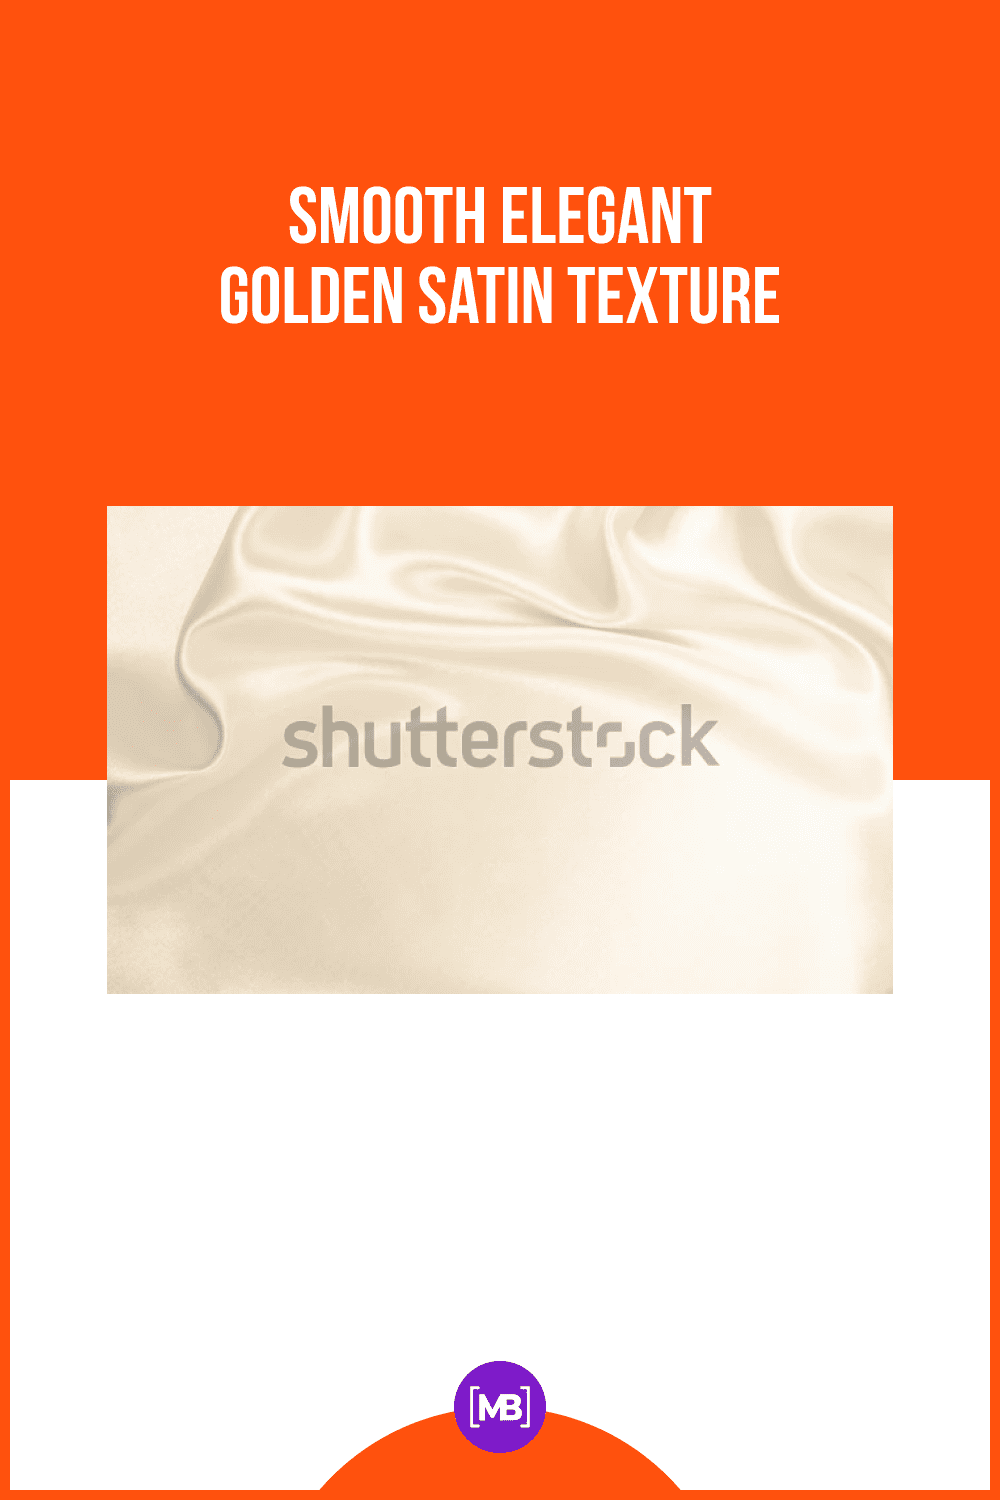 Smooth Elegant Golden Satin Texture.